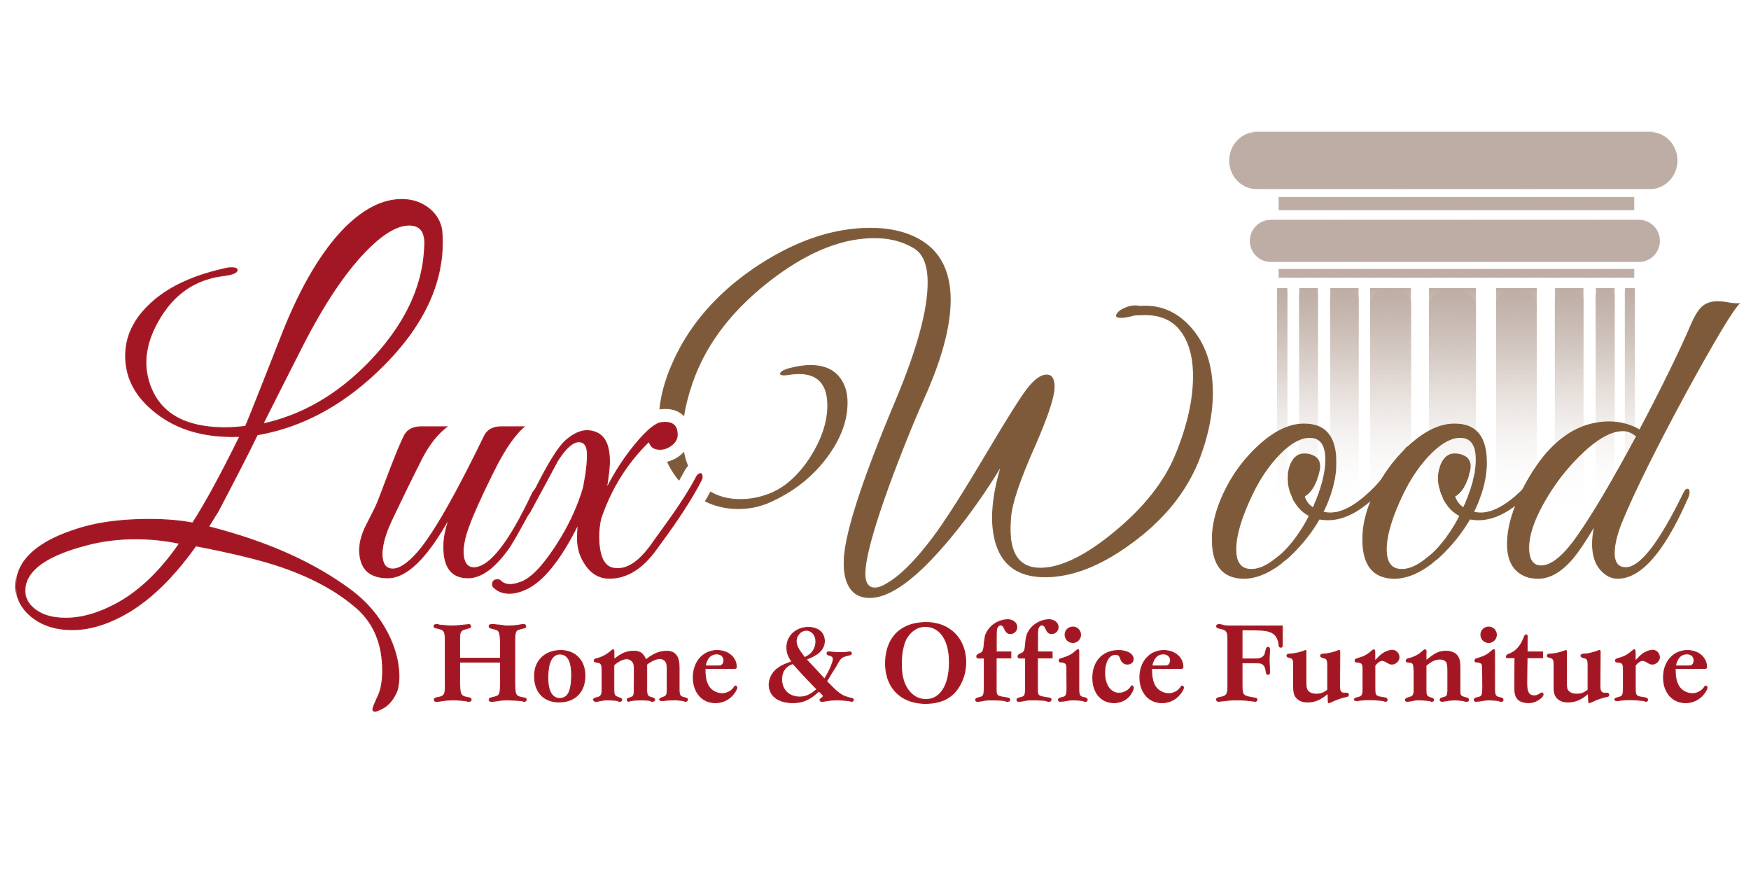 LuxWood Home & Office Furniture Logo Design